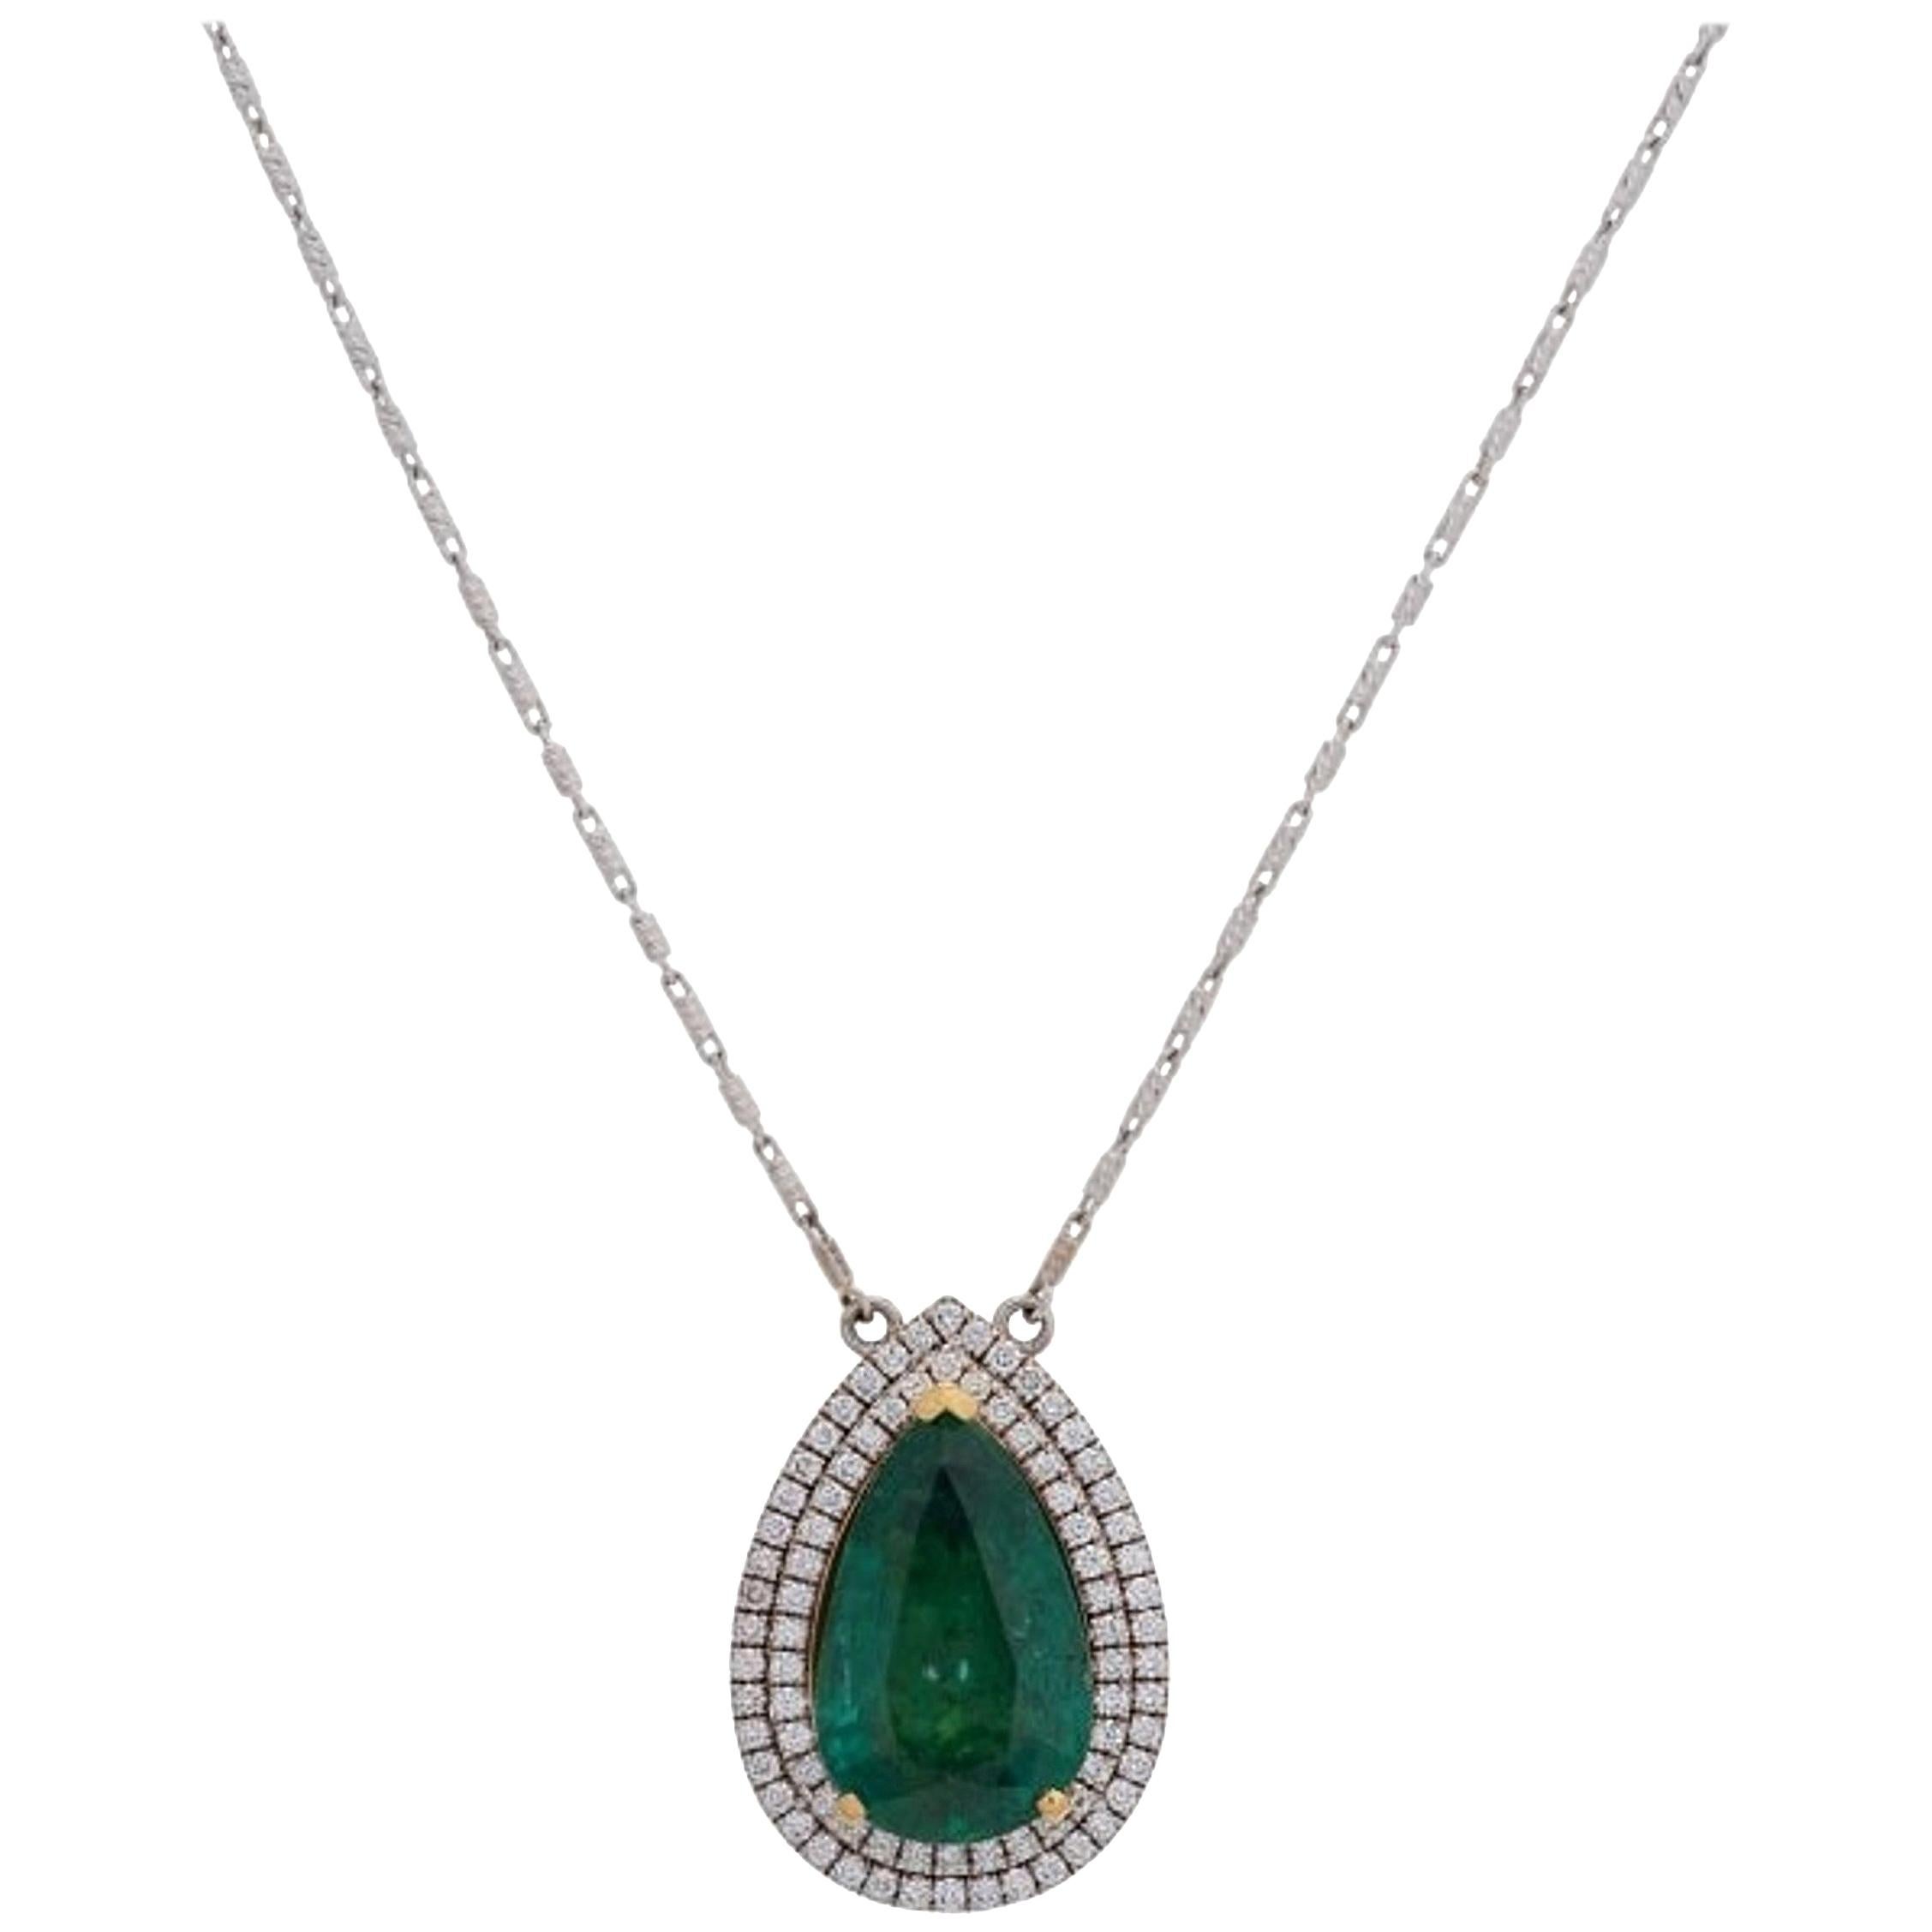 Very Fine Natural Beryl Emerald and Diamond Pendant Necklace